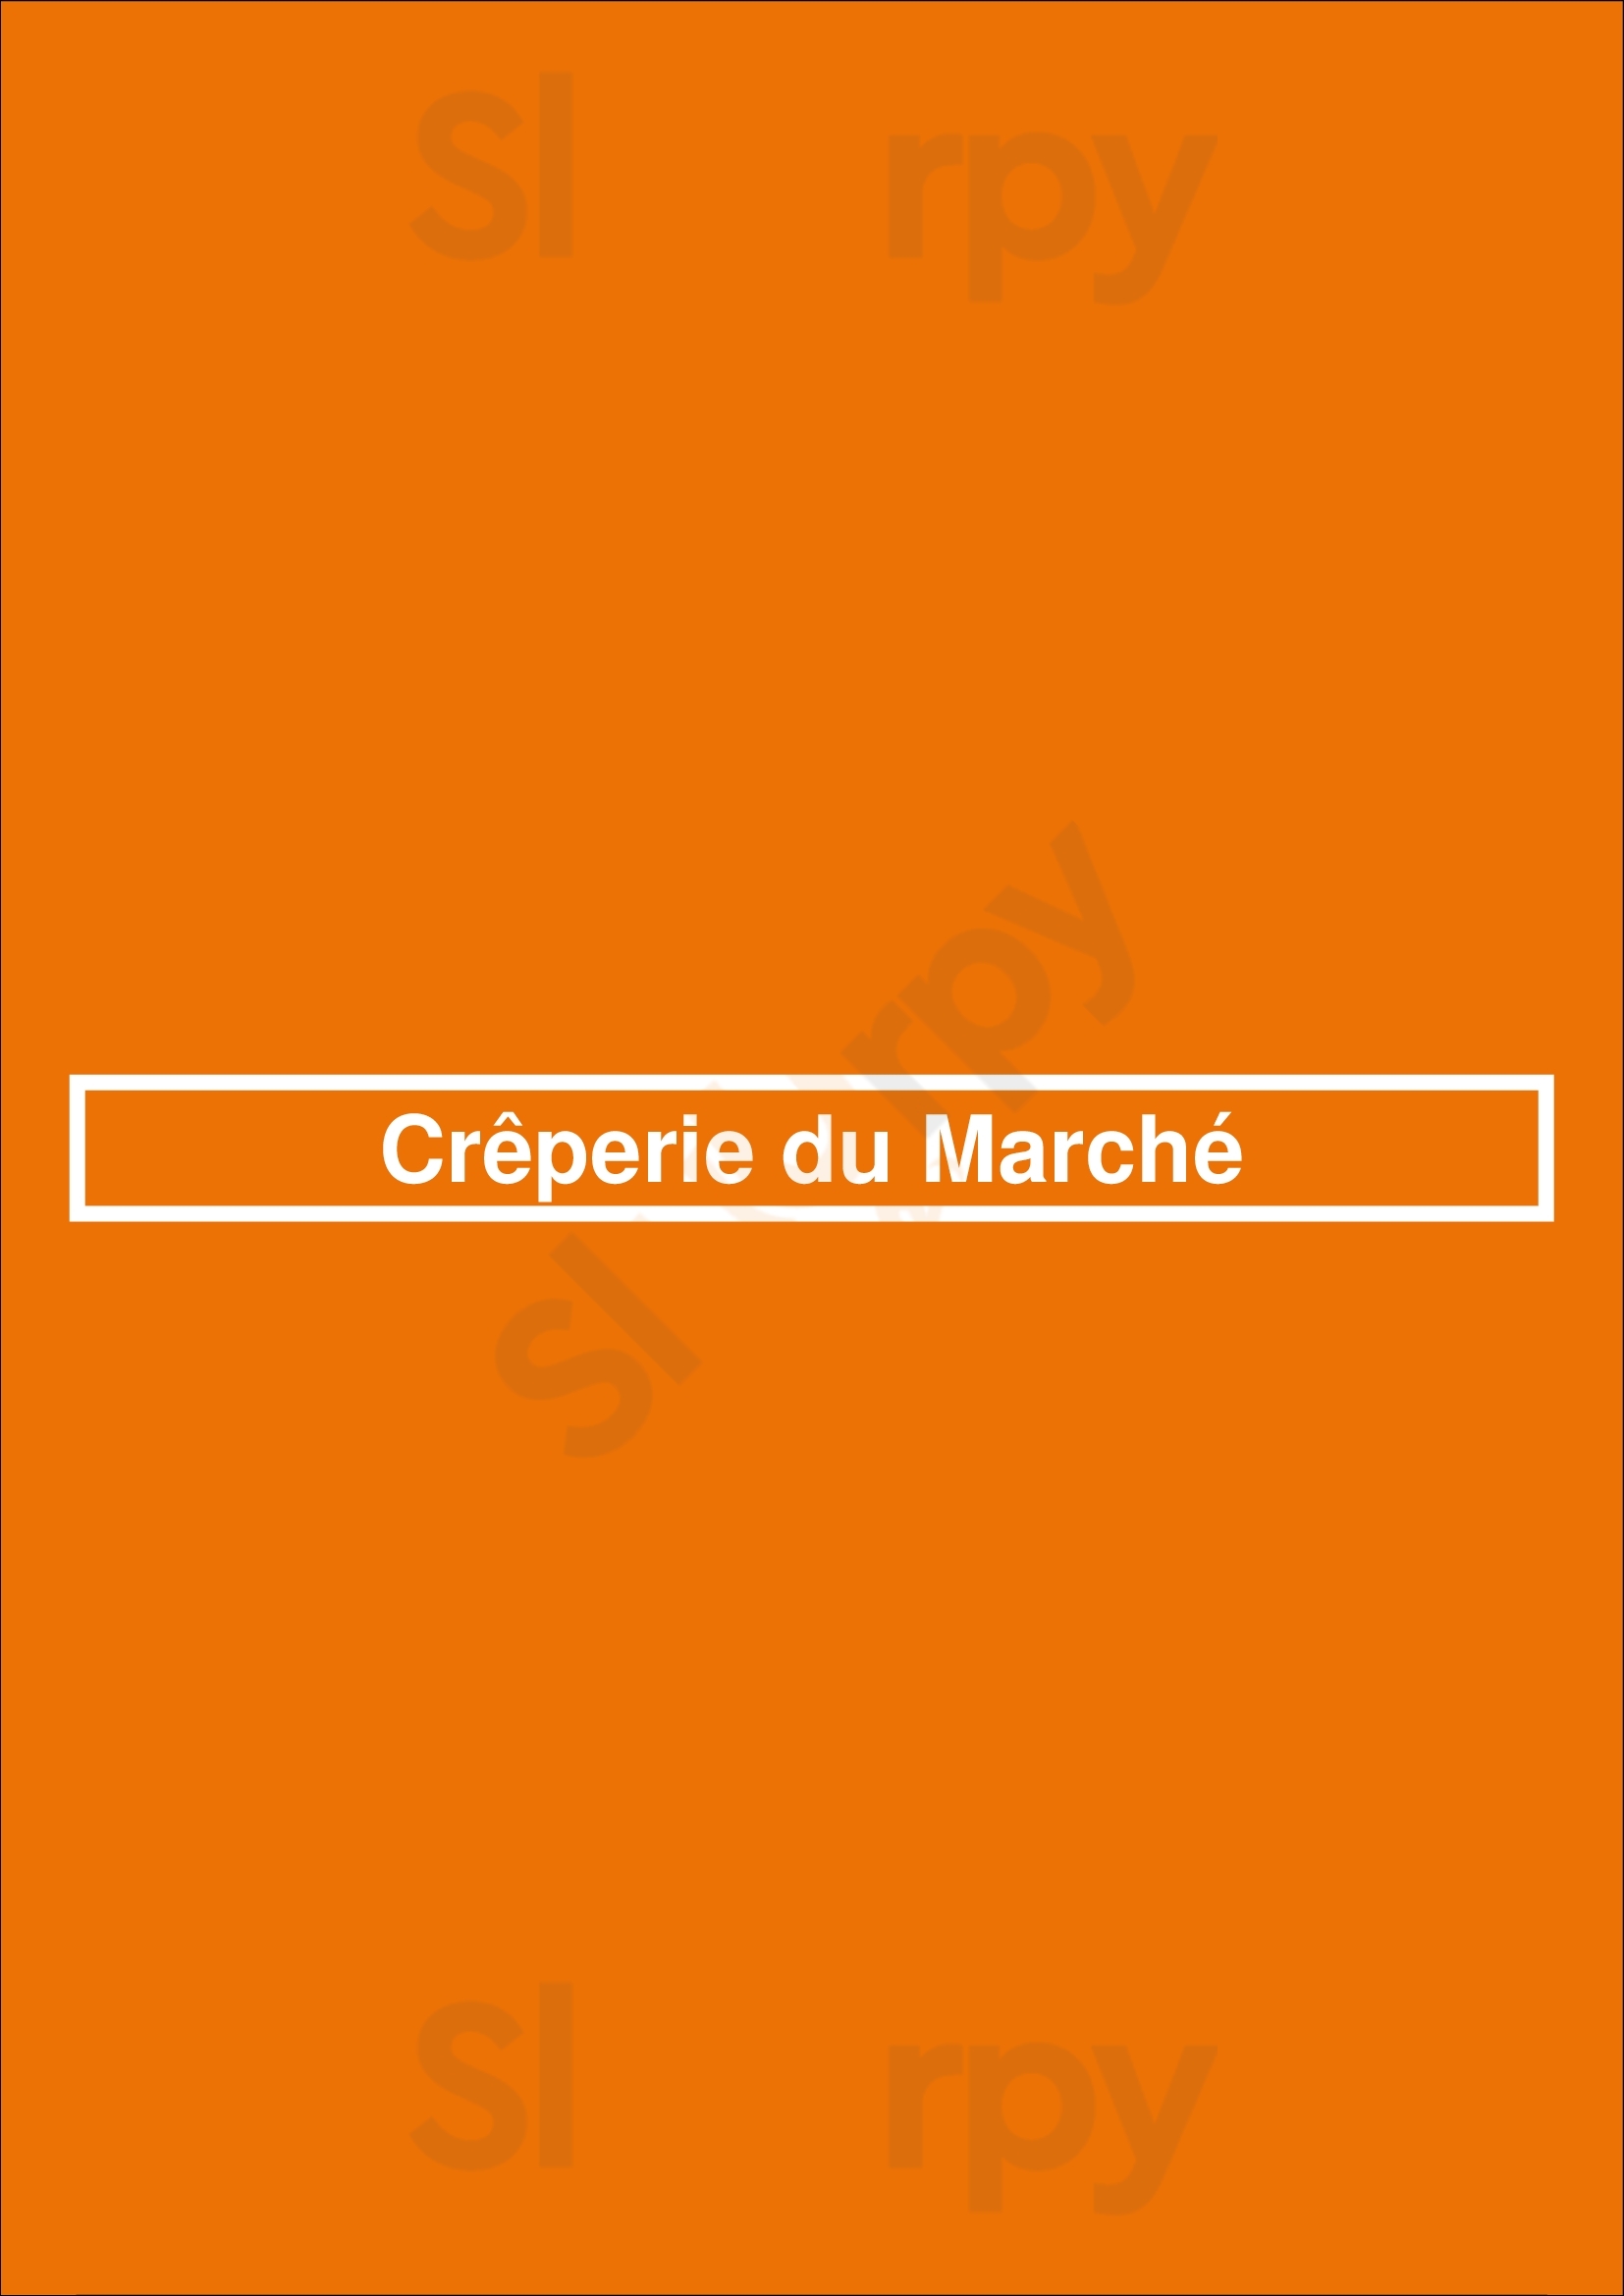 Crêperie Du Marché Saint-Malo Menu - 1